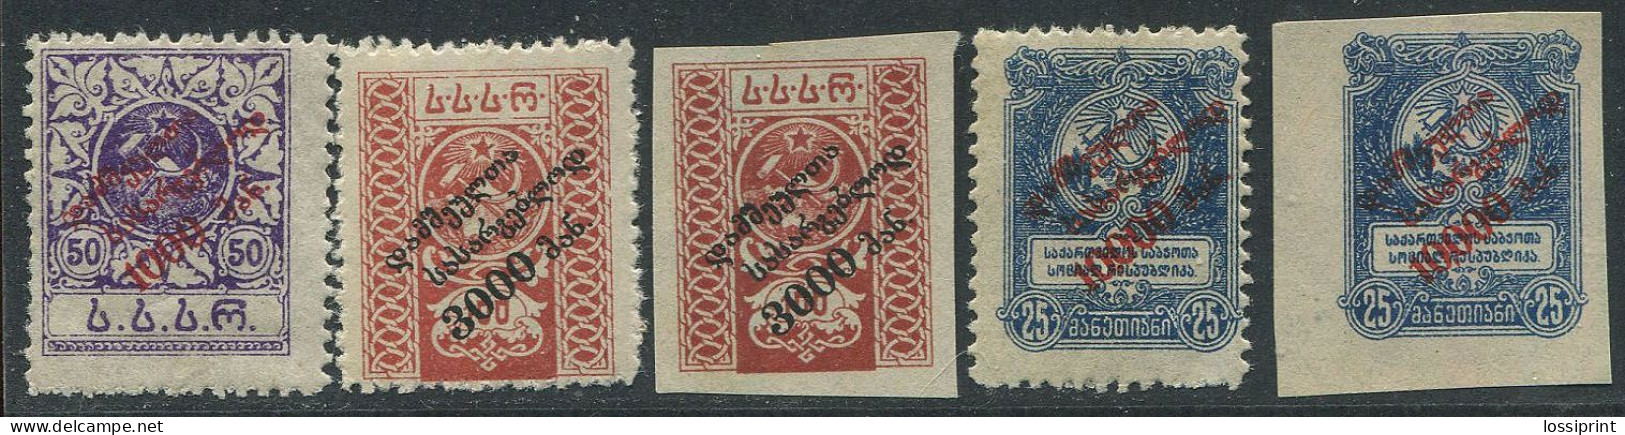 Georgia:Russia:Unused Overprinted Stamps, 1922, MNH - Georgia